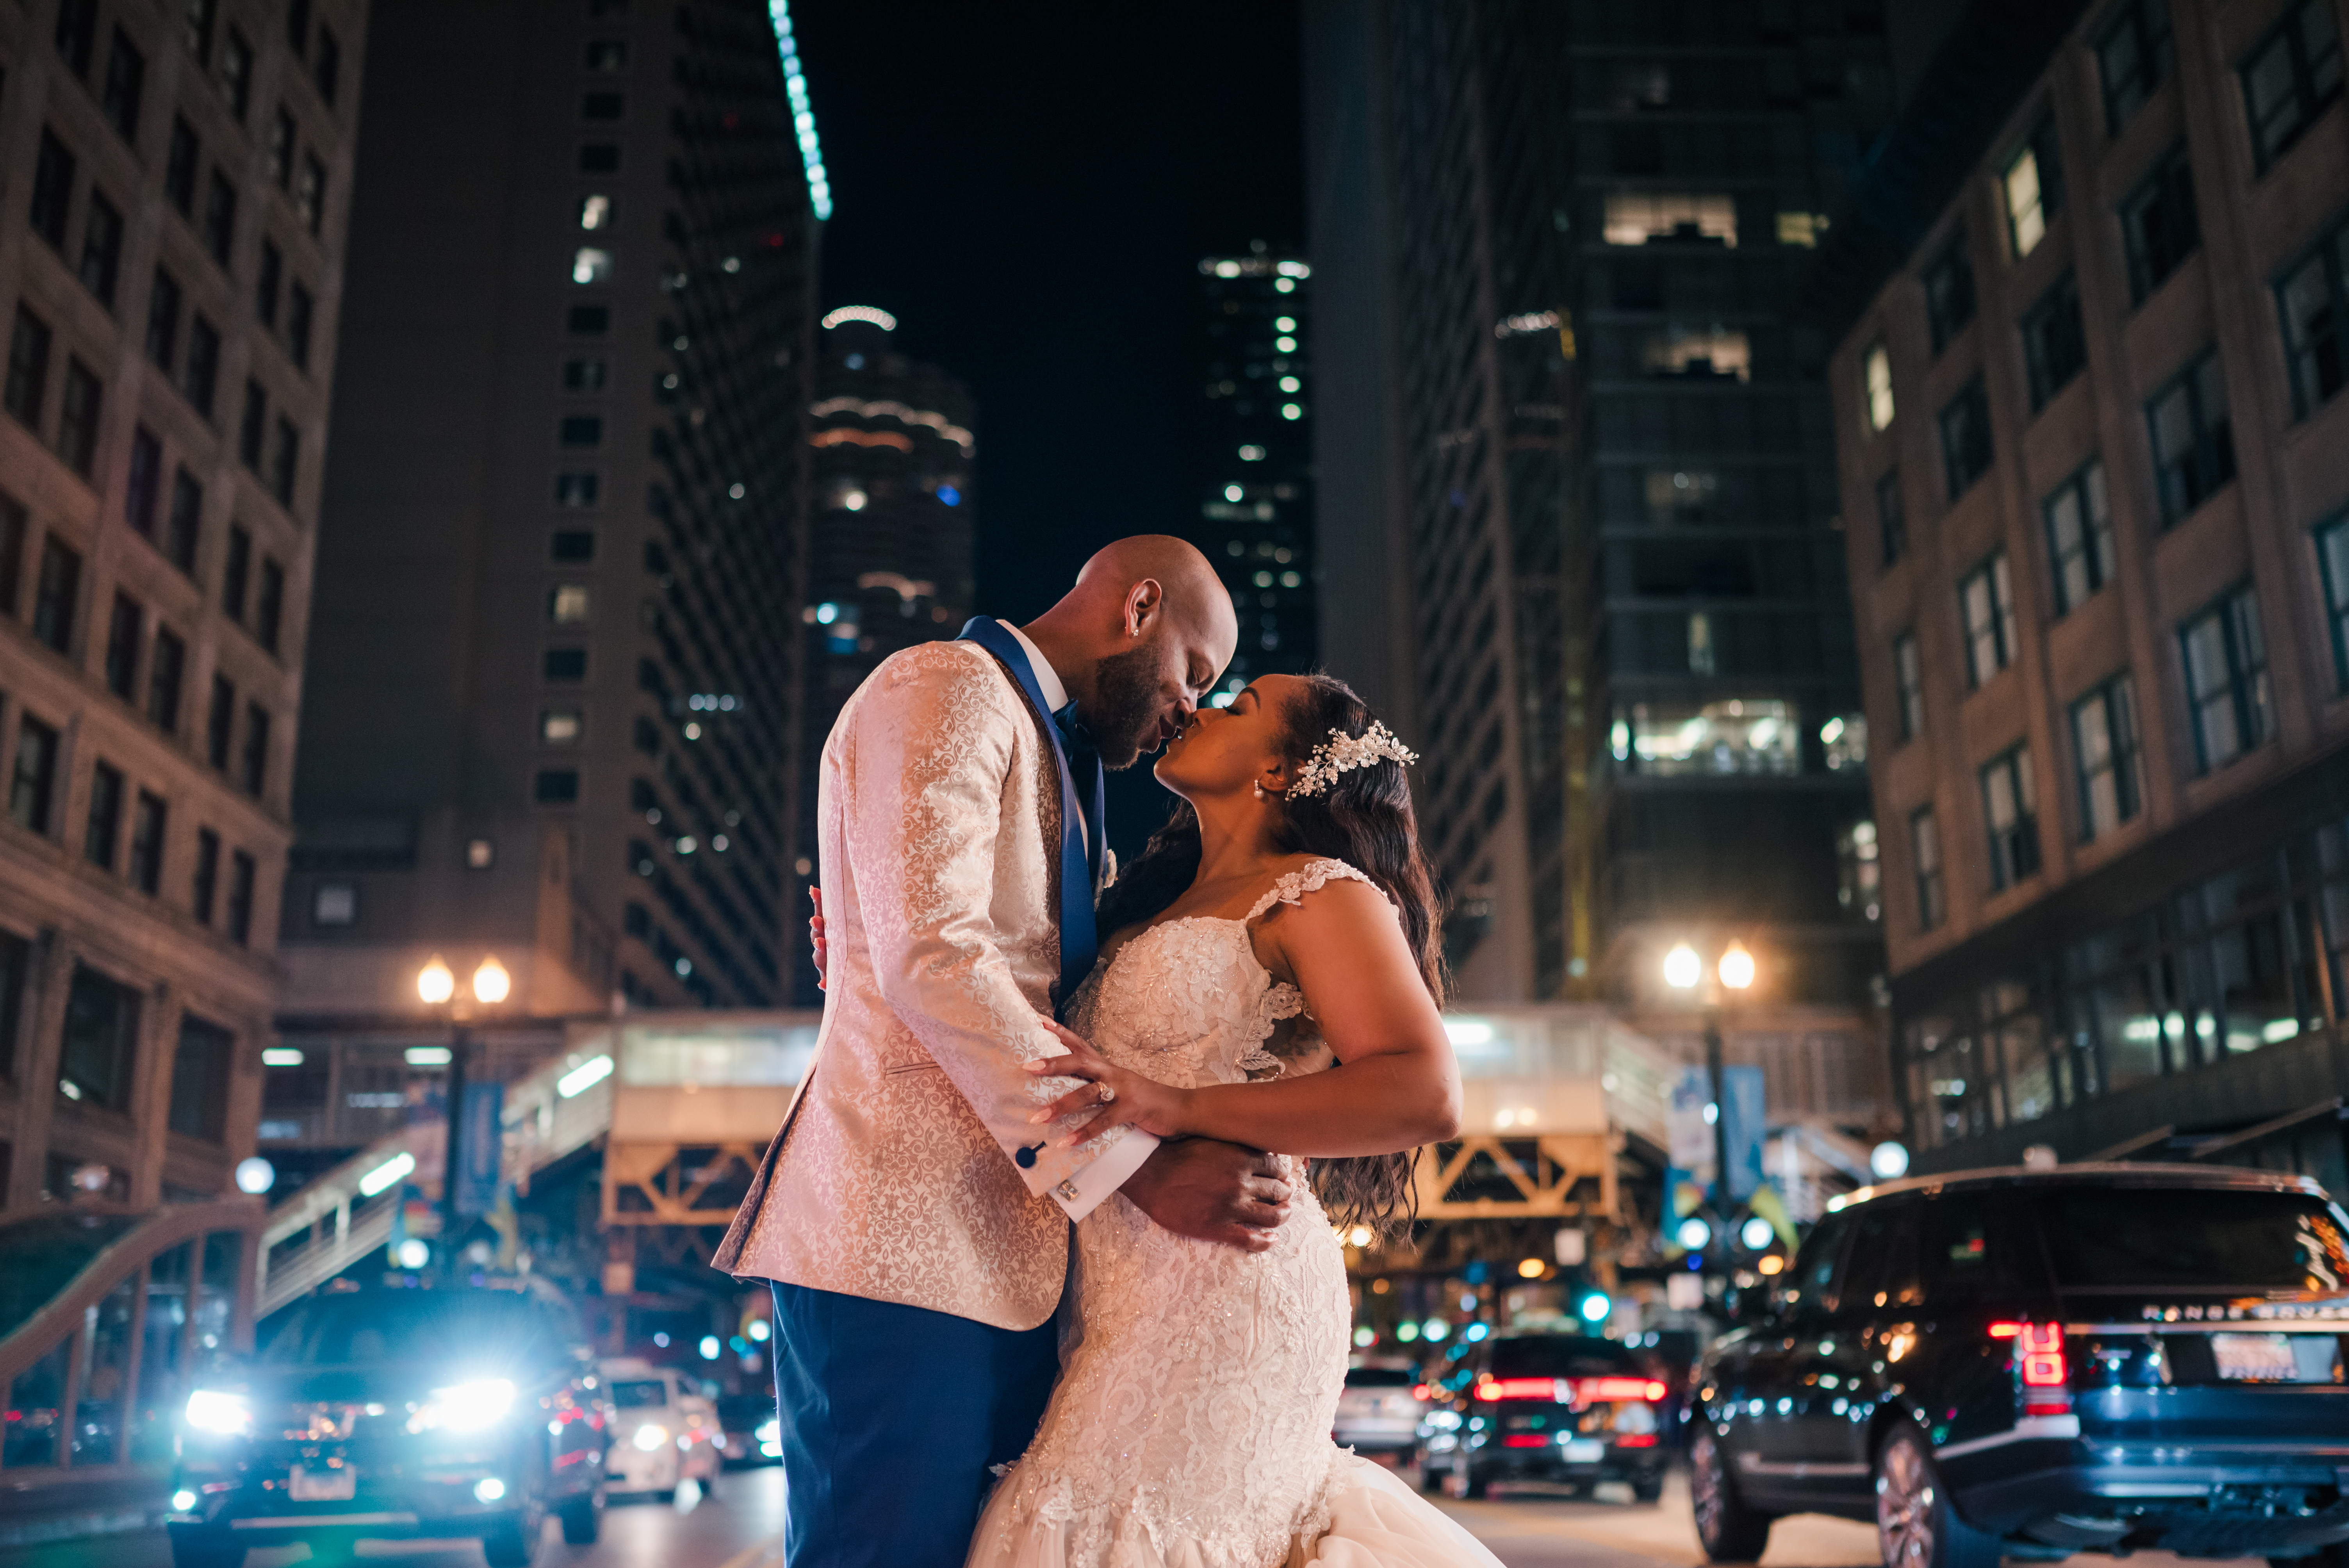 Downtown Chicago wedding portrait at night.